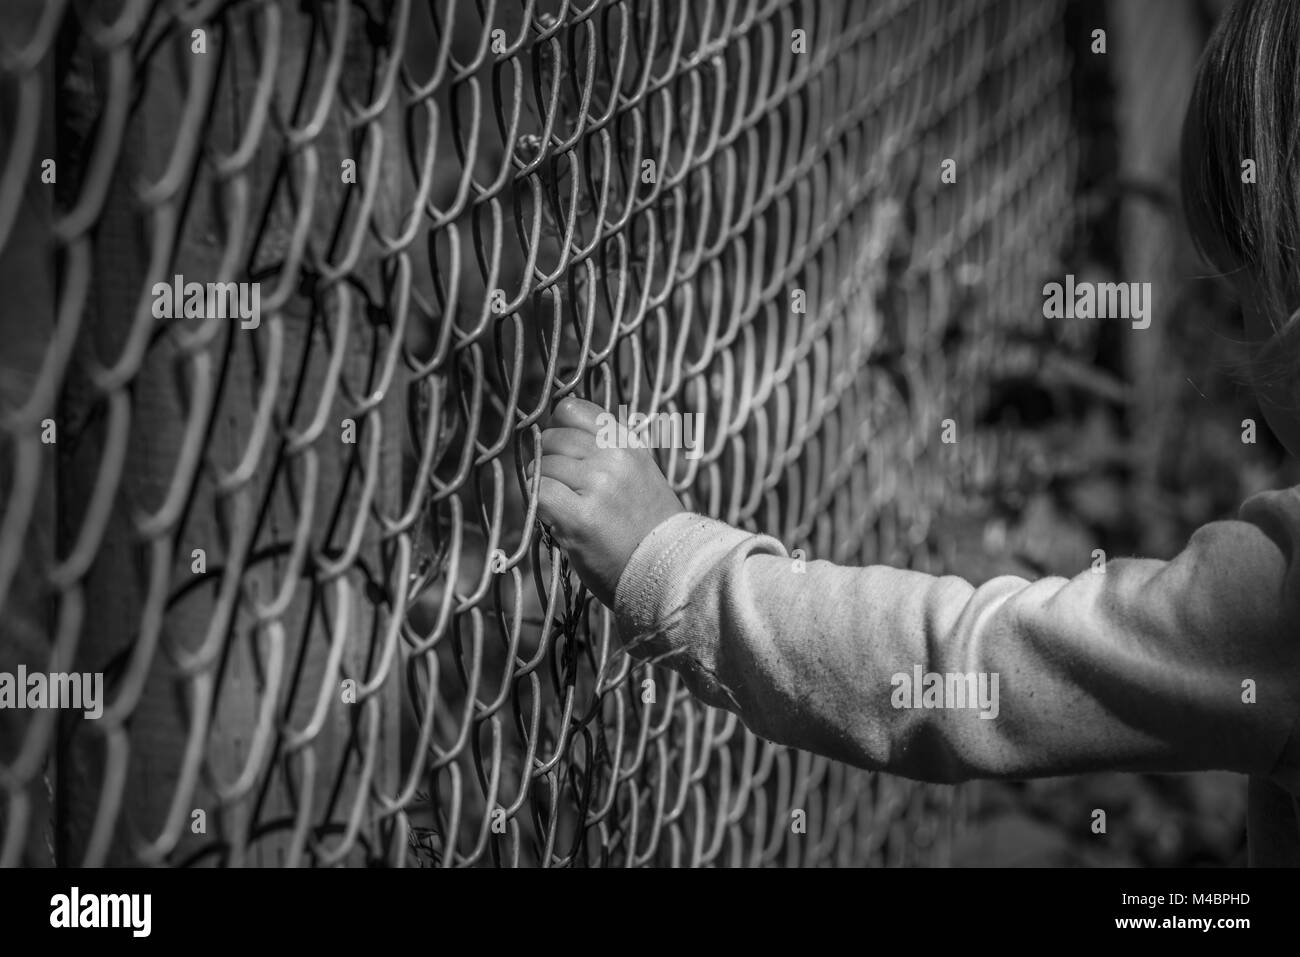 Little girl hand holding fence Stock Photo